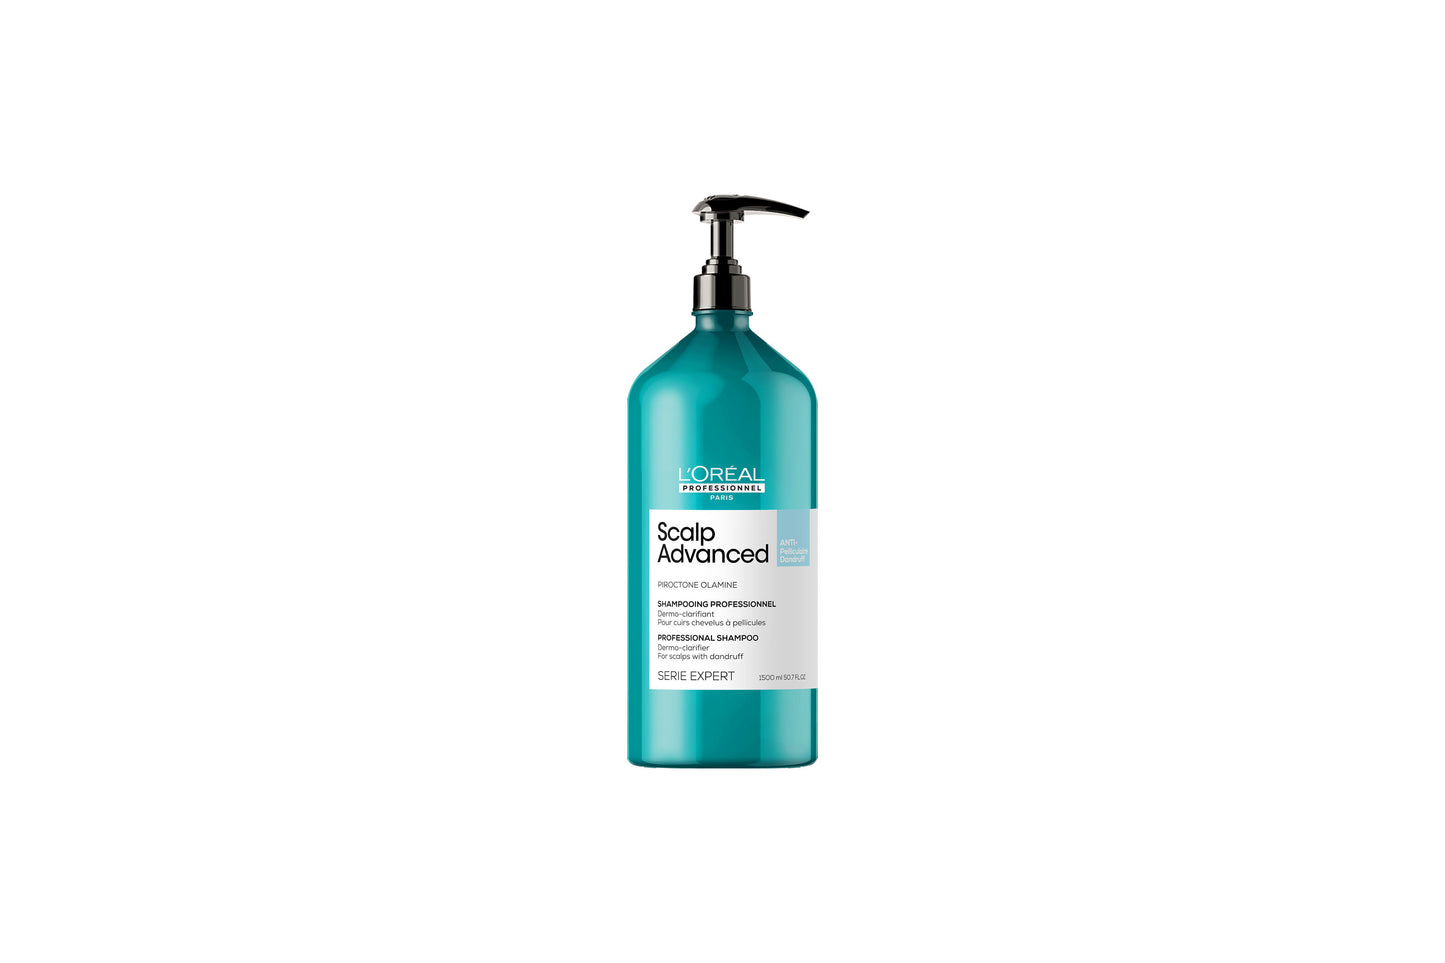 Scalp Advanced Anti-Dandruff Dermo clarifier Shampoo with Pump 1500ml